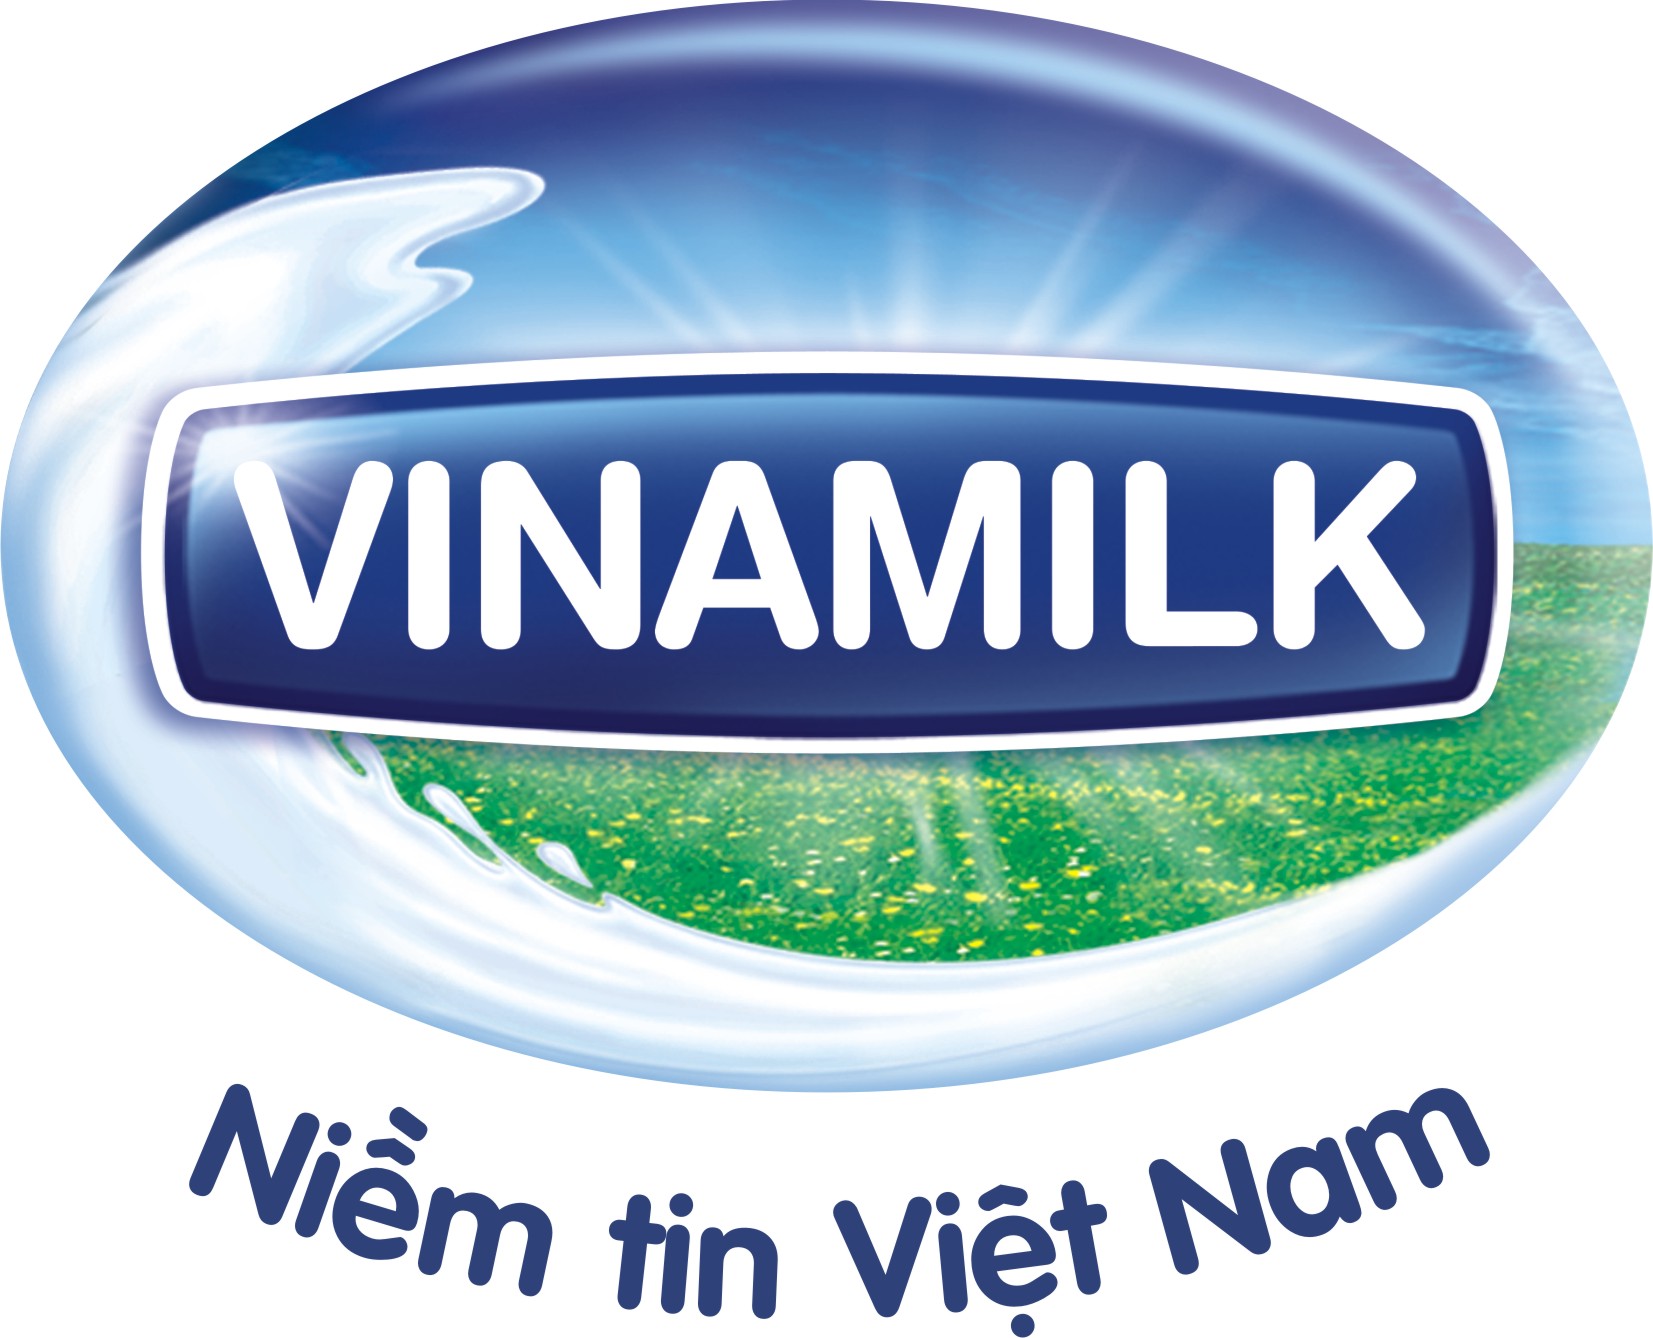 Dairy giant of Vietnam set to break into Asia's top 50 